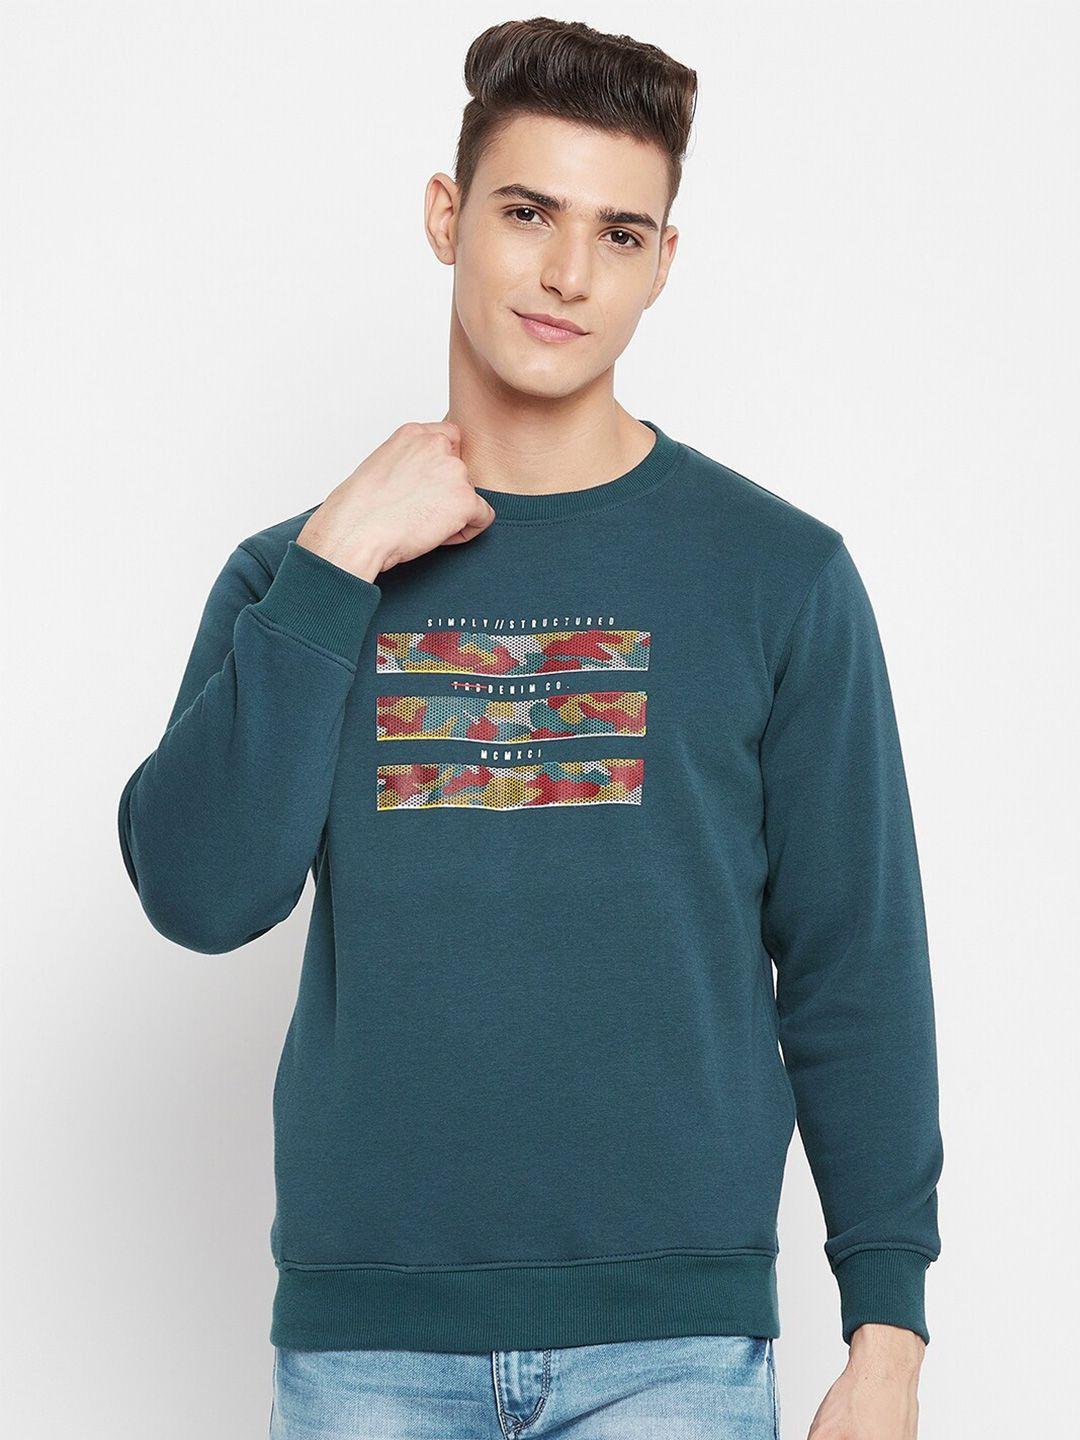 duke-men-teal-printed-sweatshirt